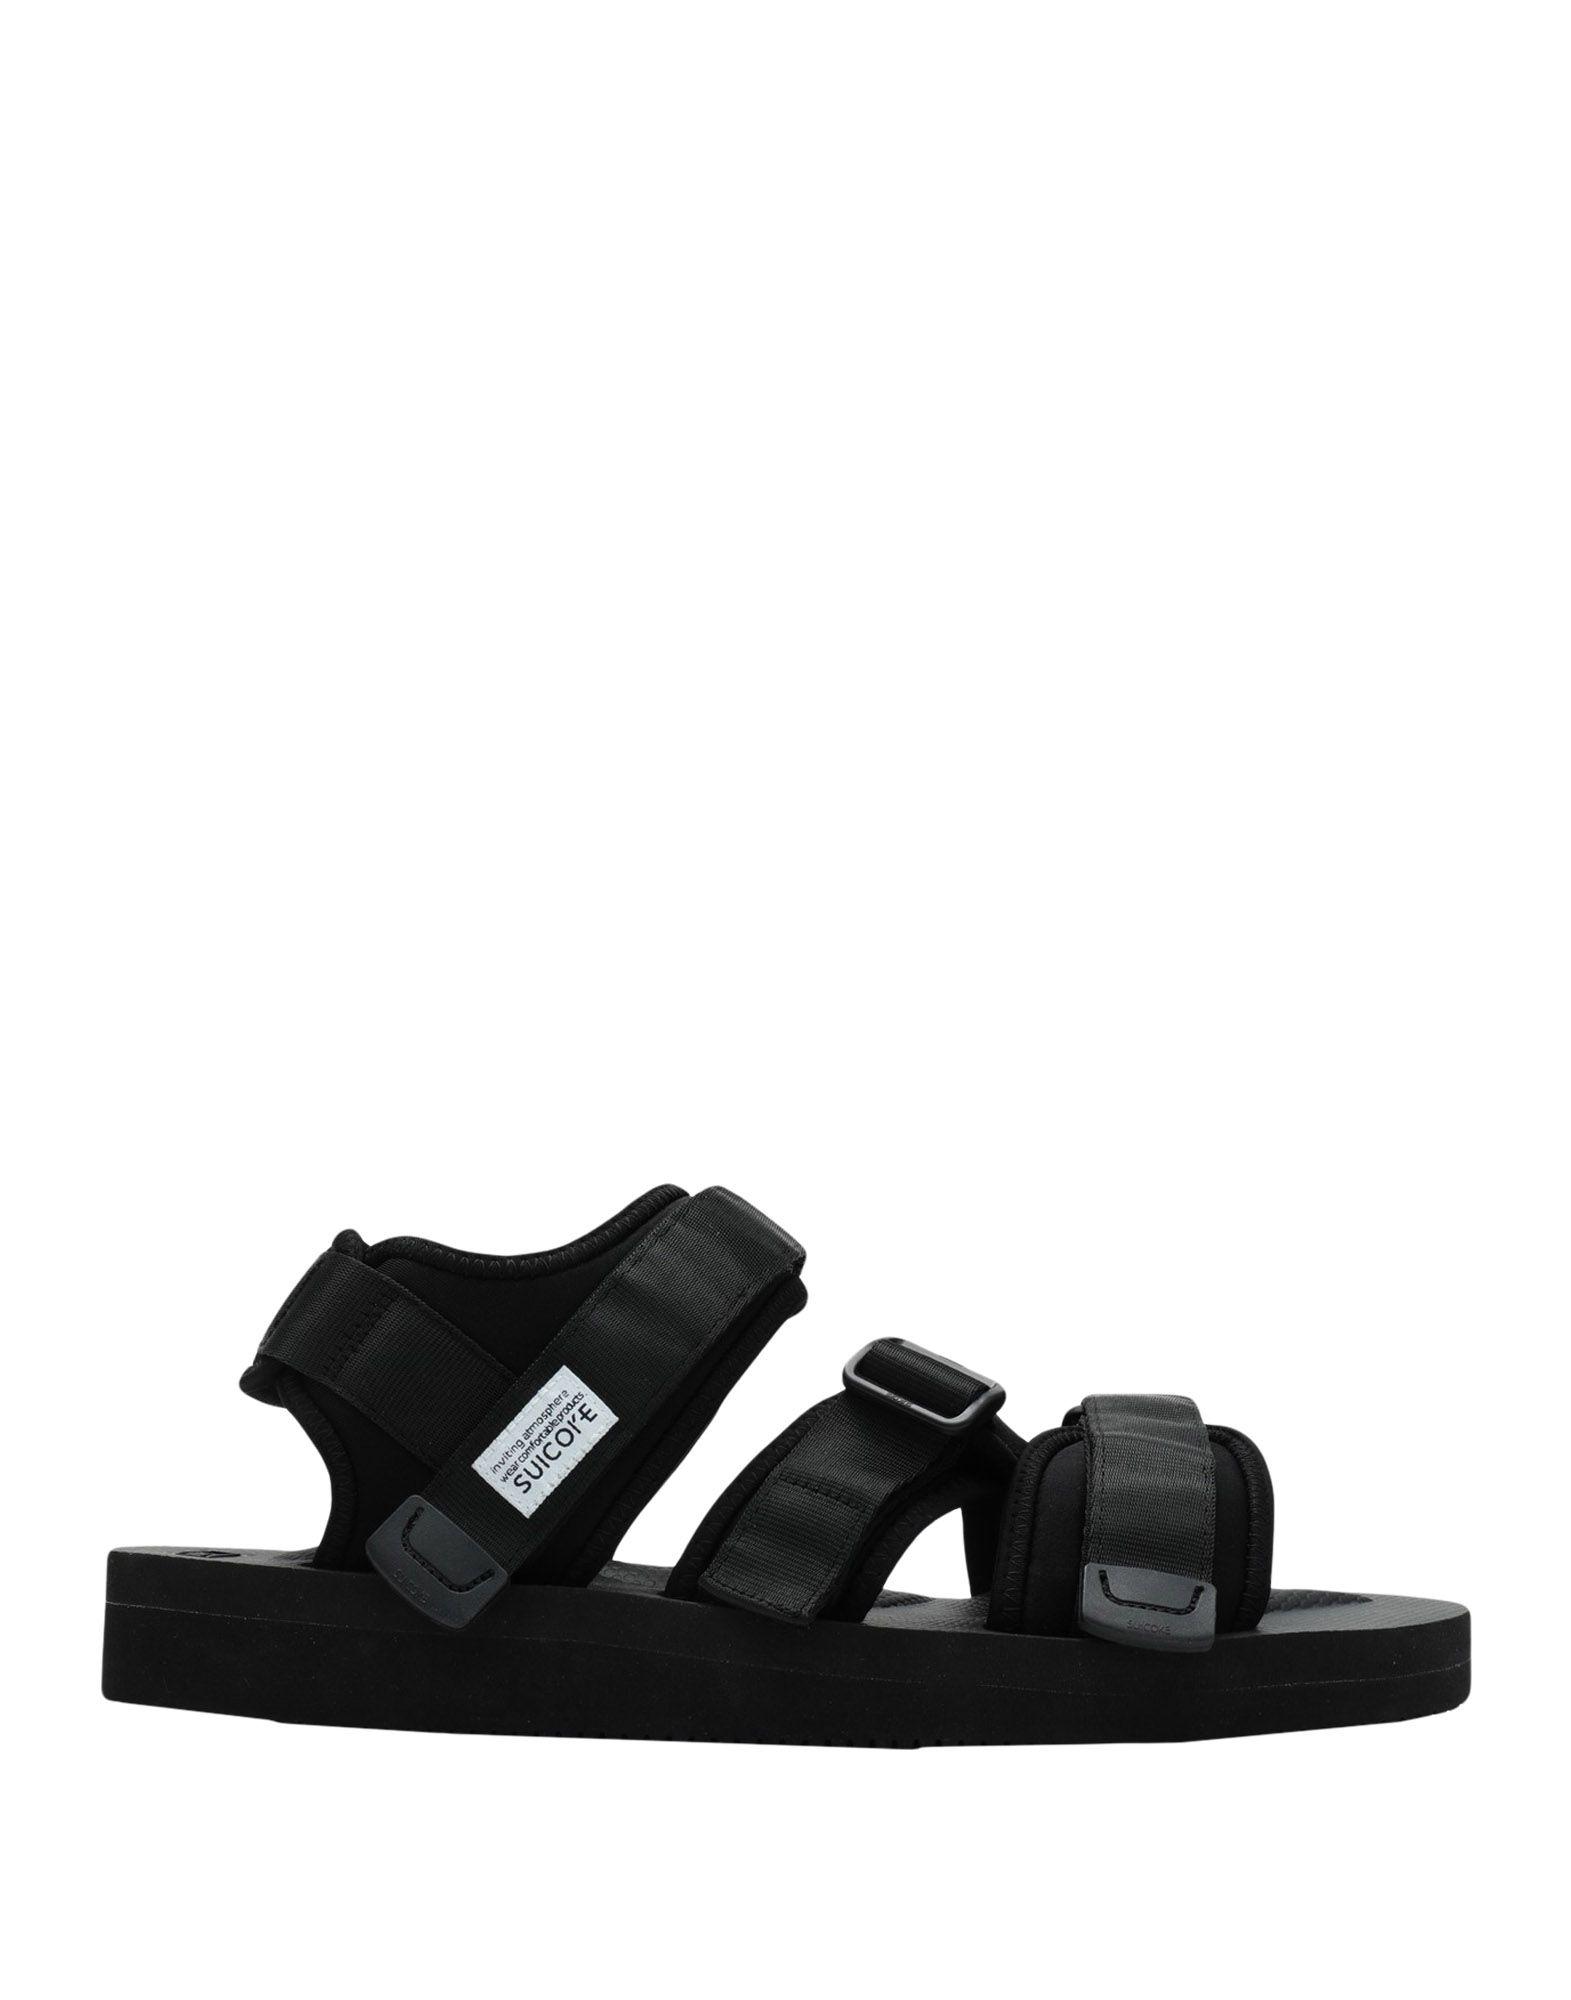 Suicoke Sandals in Black for Men - Lyst